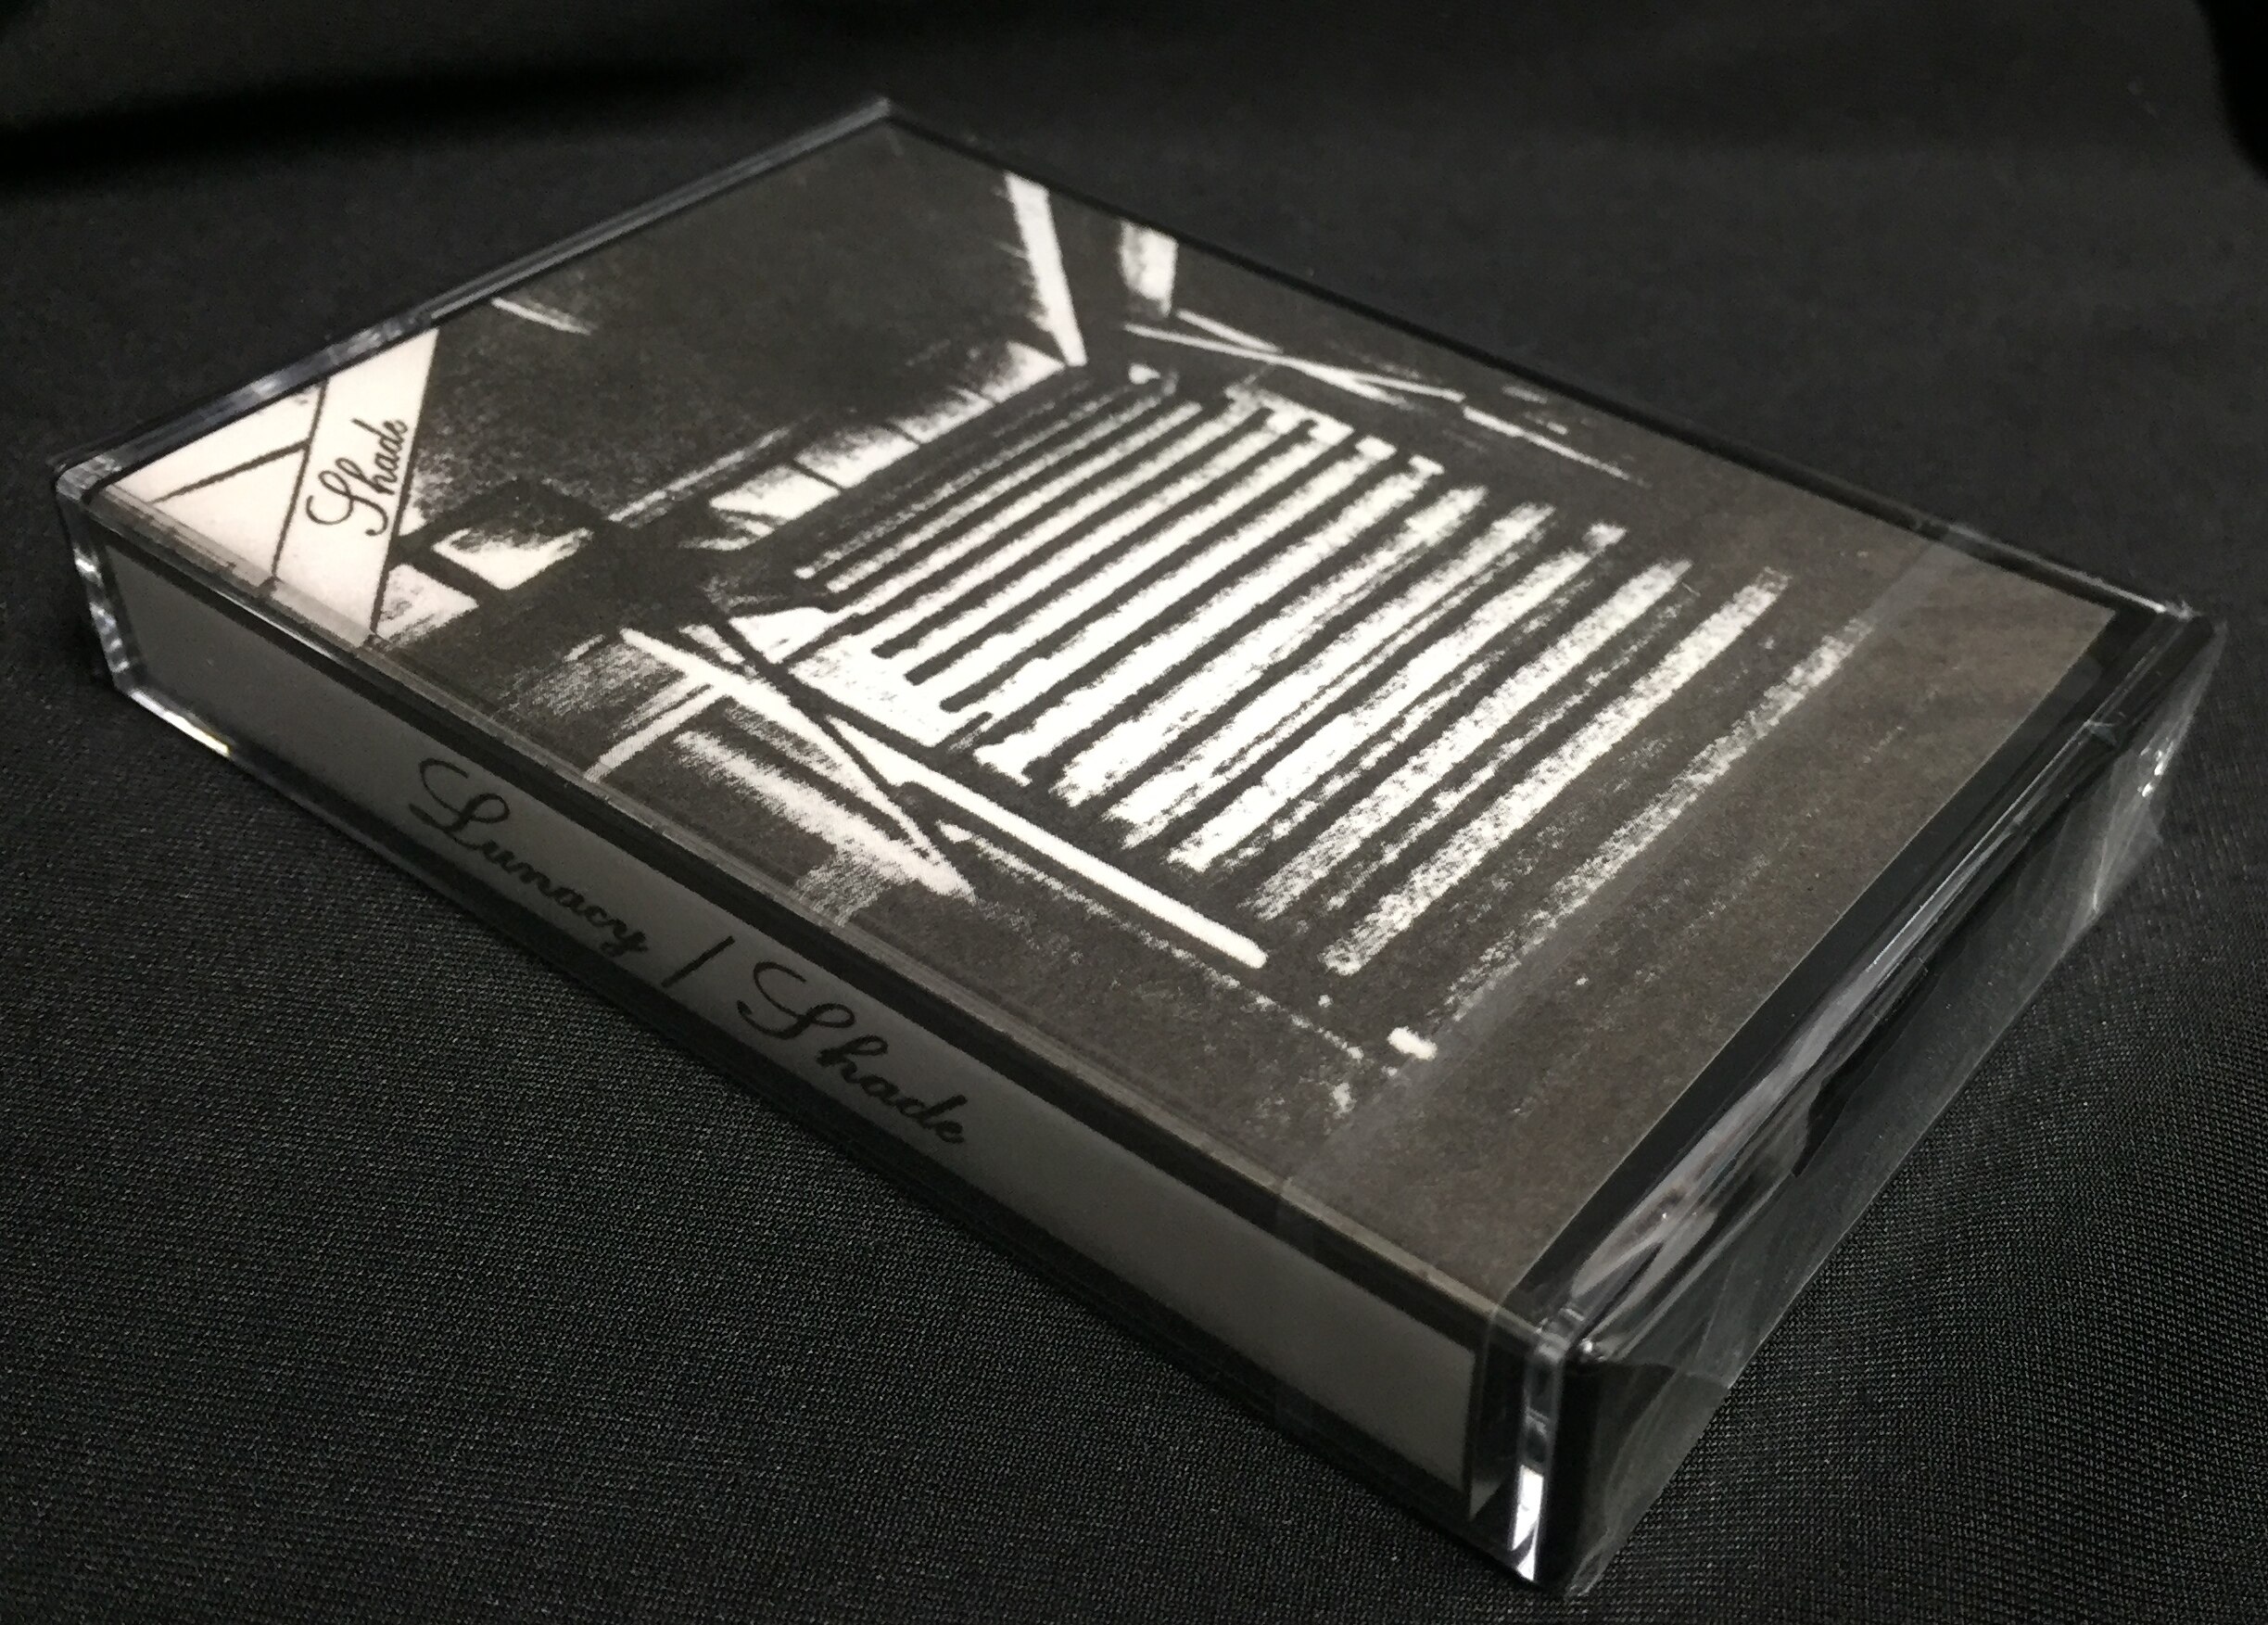 LUNA SEA 数量限定生産盤 PREMIUM BOX(CD+カセットテープ+ロングT 